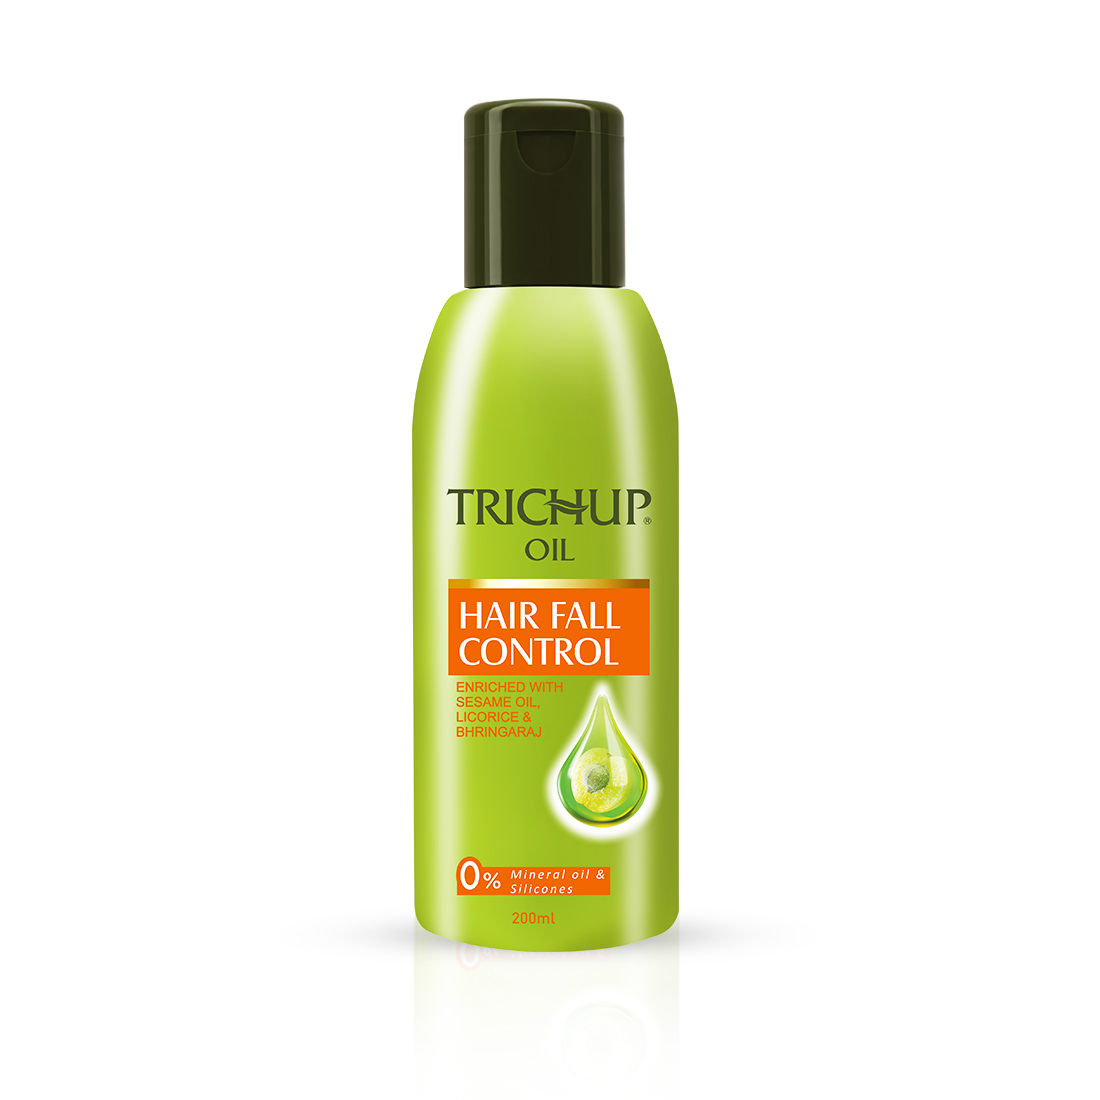 Buy Vasu Trichup Hair Fall Control Oil at Best Price Online